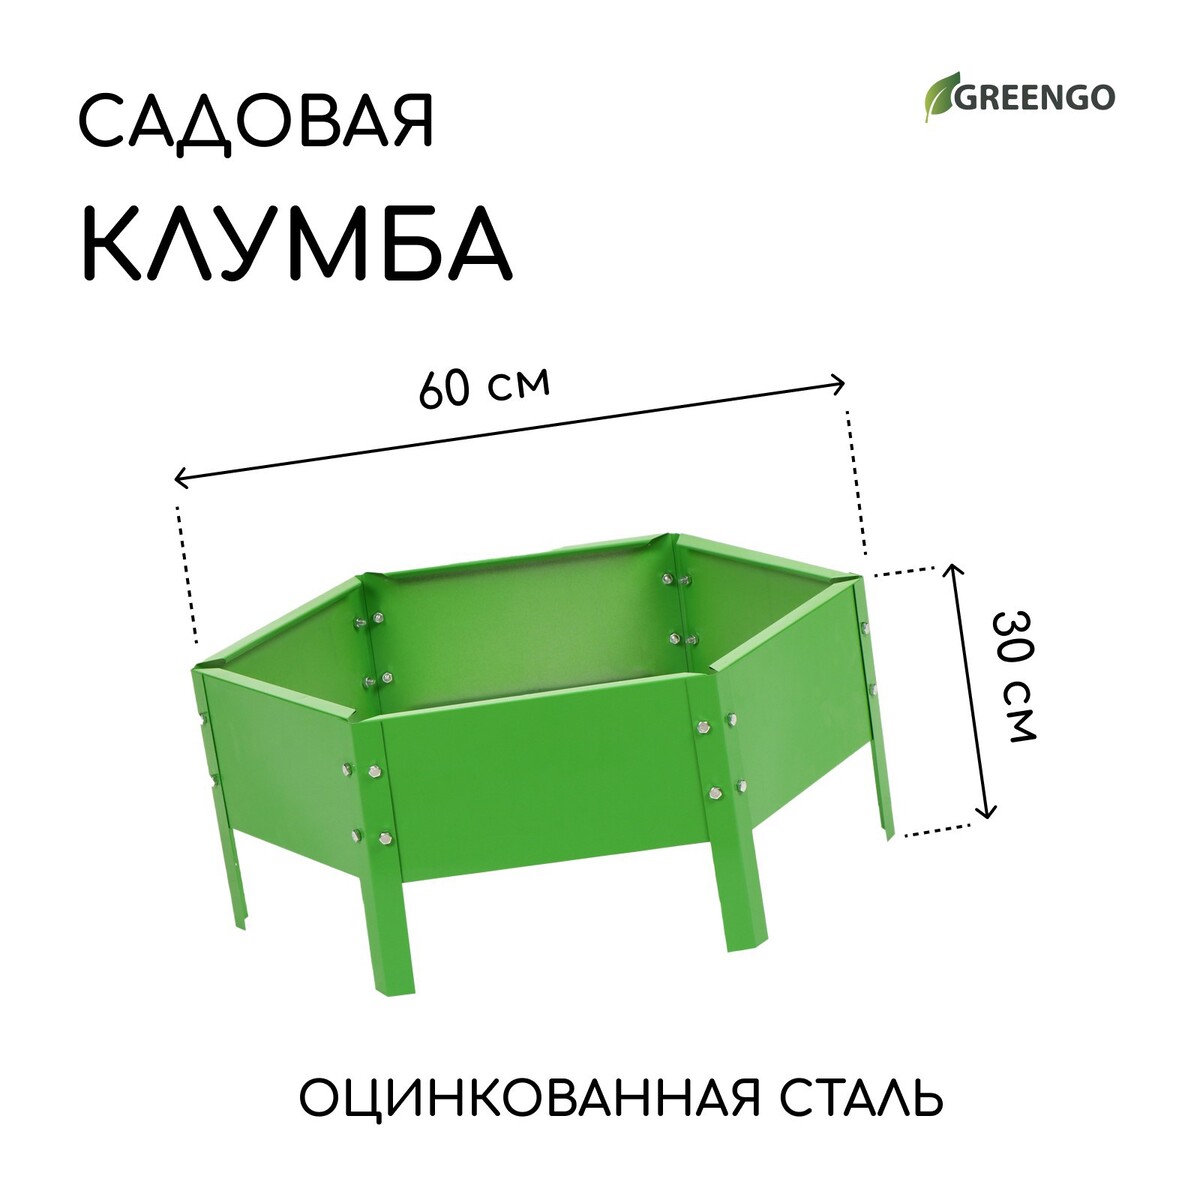 Клумба оцинкованная, d = 60 см, h = 15 см, ярко-зеленая, greengo клумба оцинкованная d 60 см h 15 см сиреневый greengo